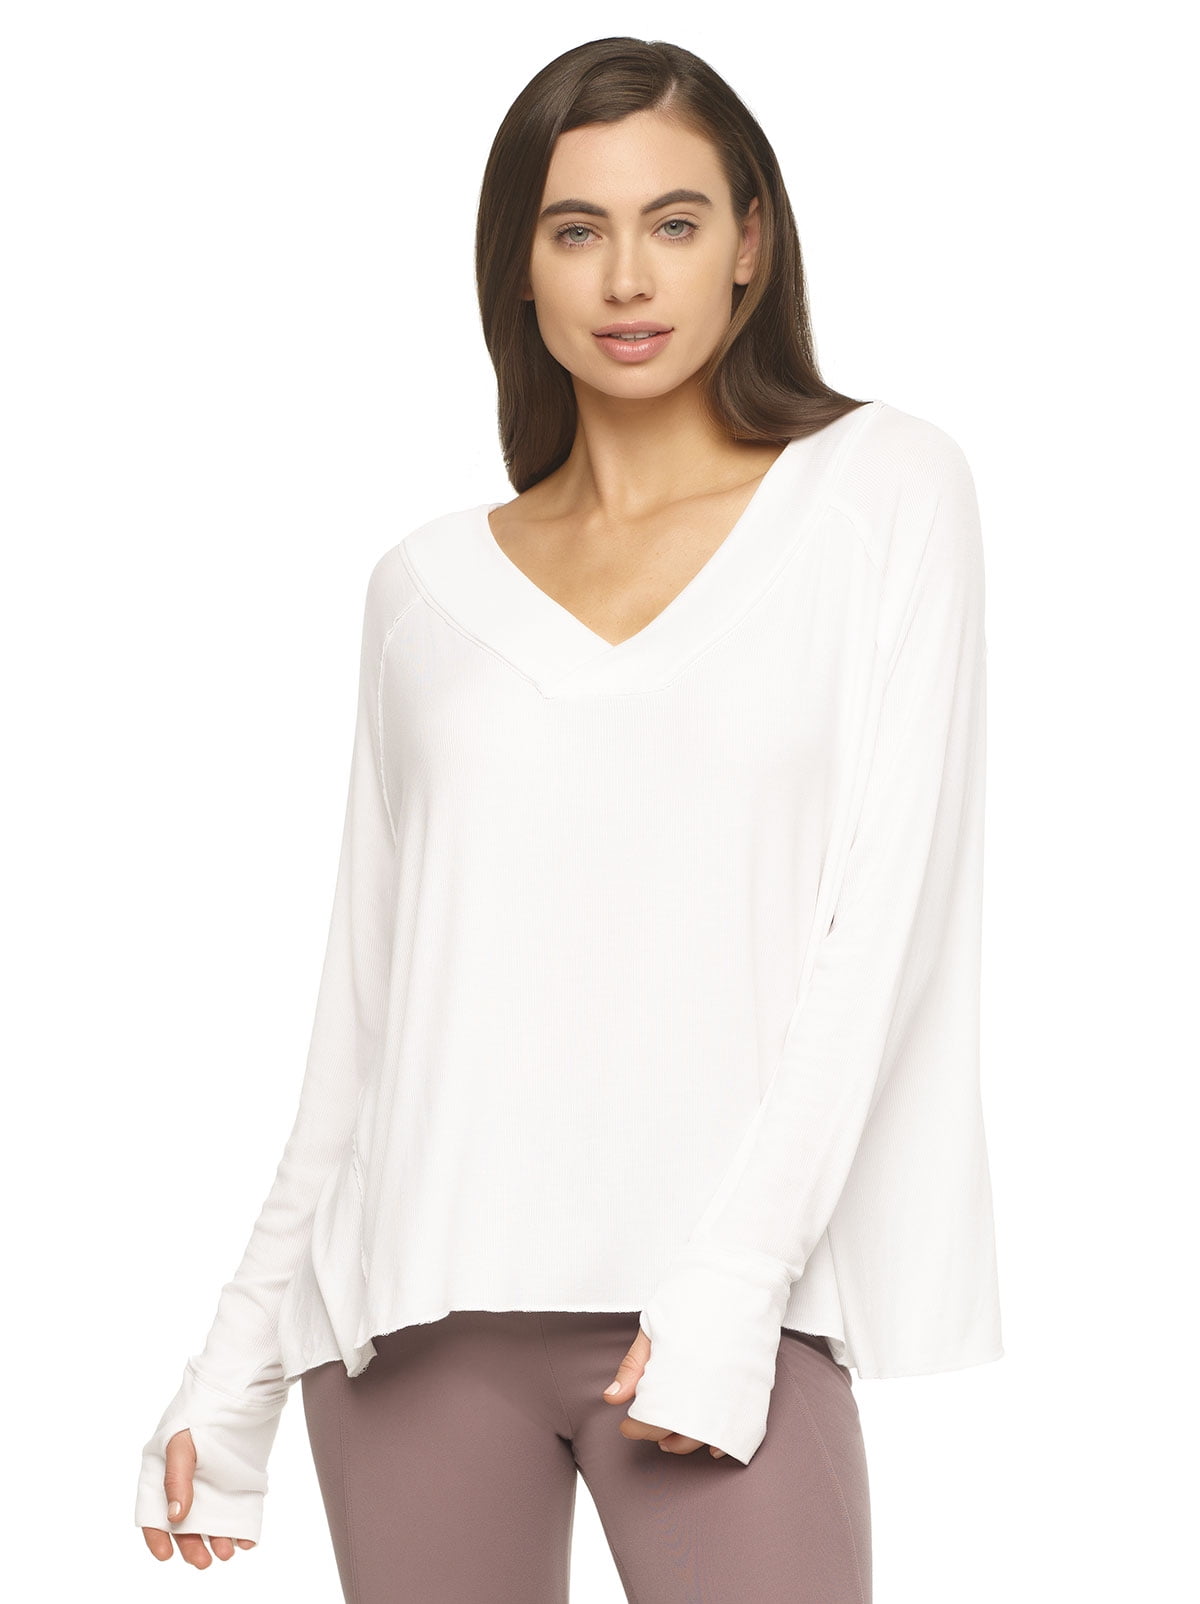 Felina | Women's Long Sleeve V-Neck Top (White, Large) - Walmart.com